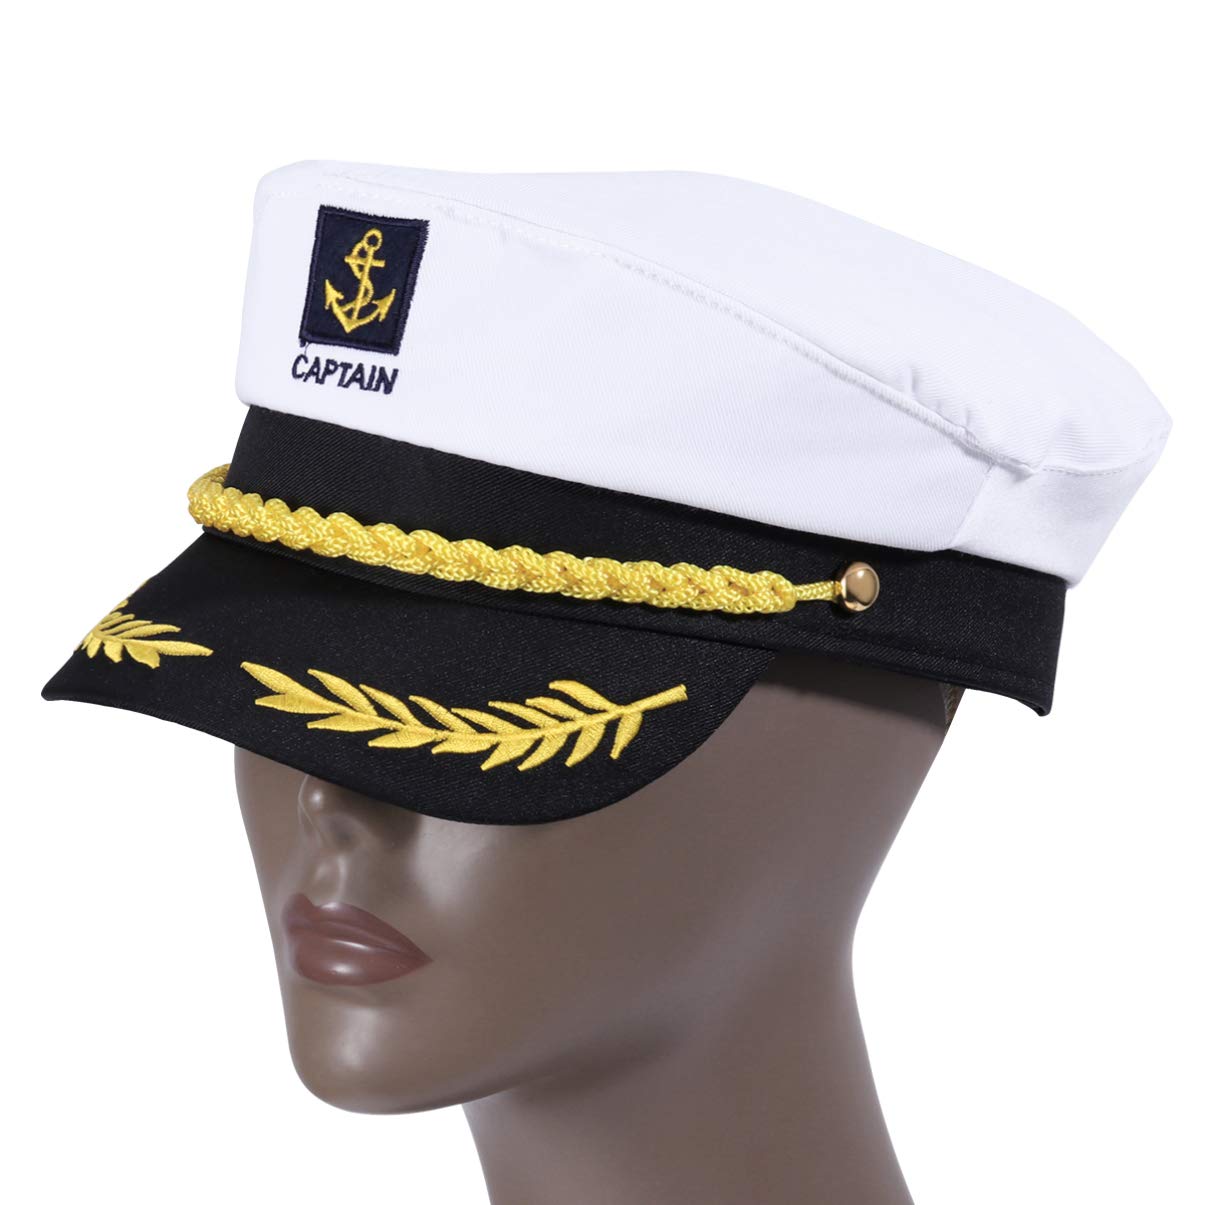 BESTOYARD Captain Hat Cap Costume Navy Marine Admiral Hat for Costume Accessory